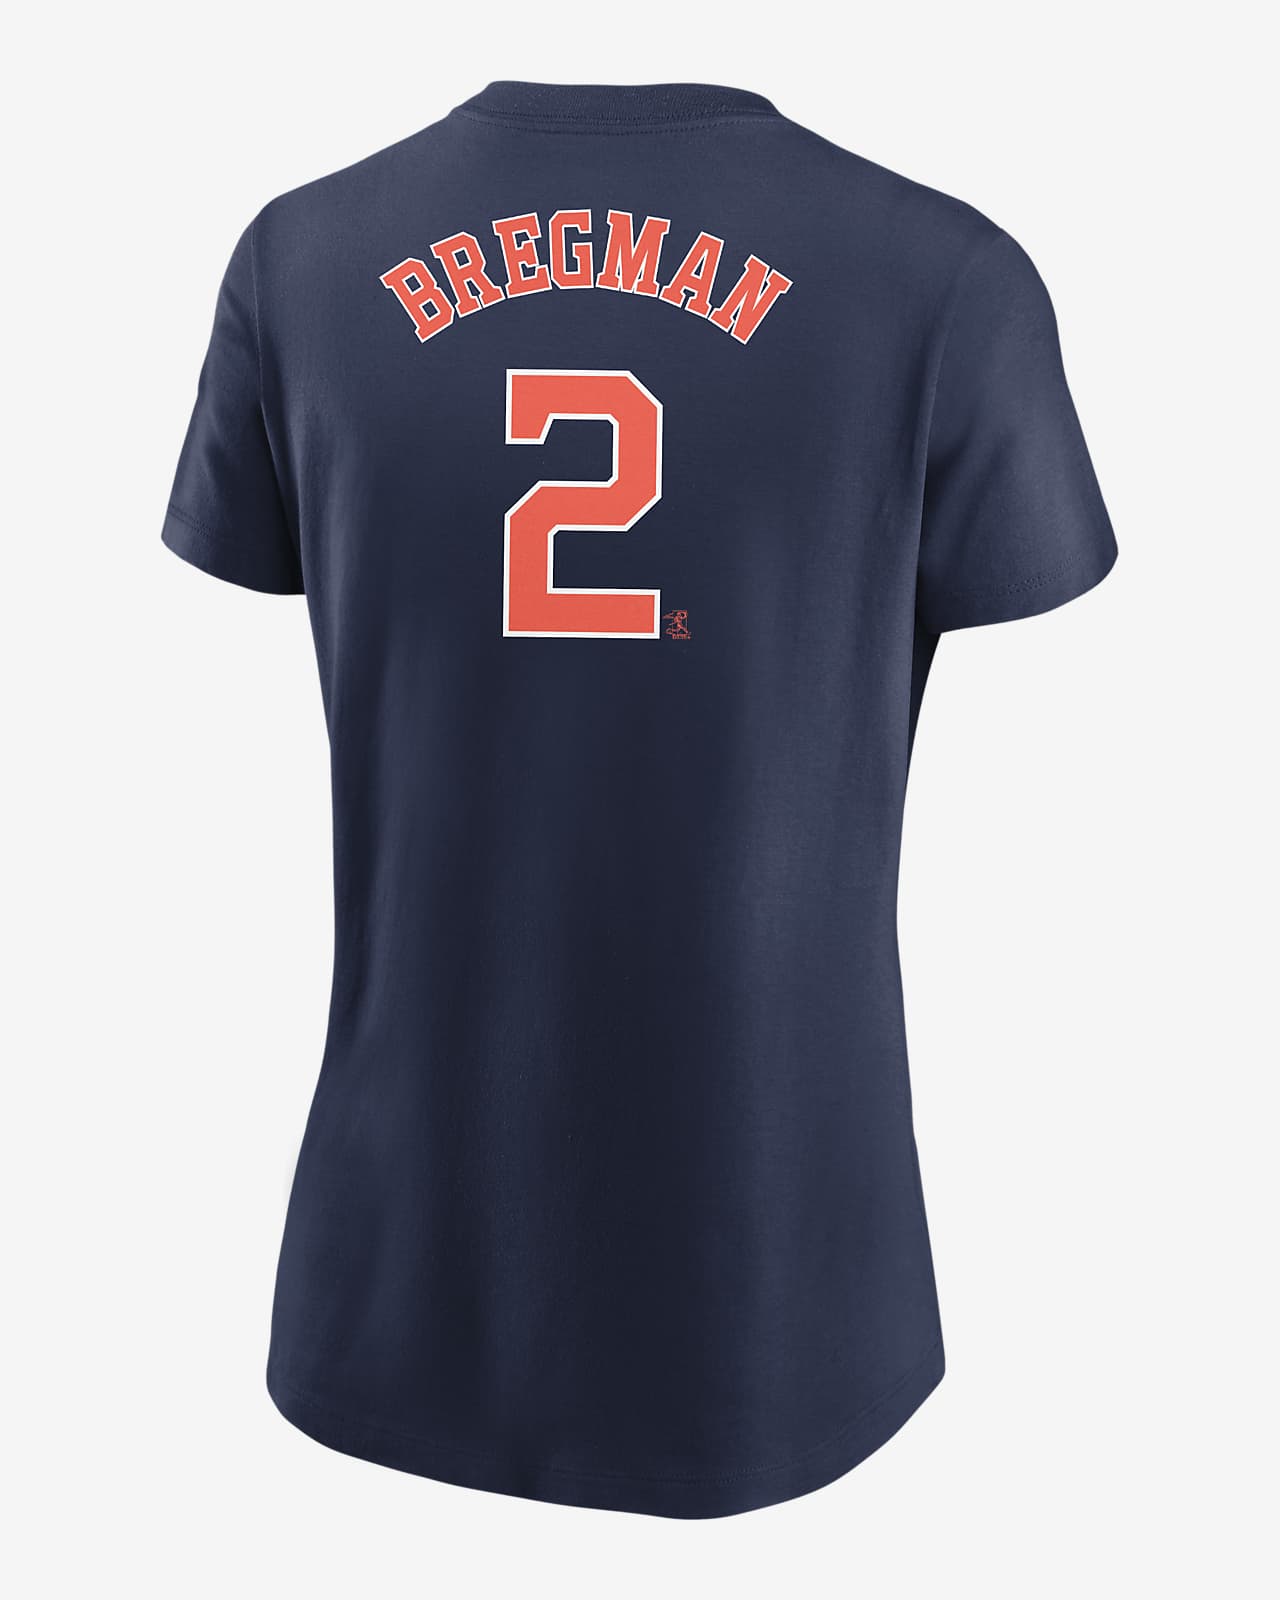 bregman t shirt